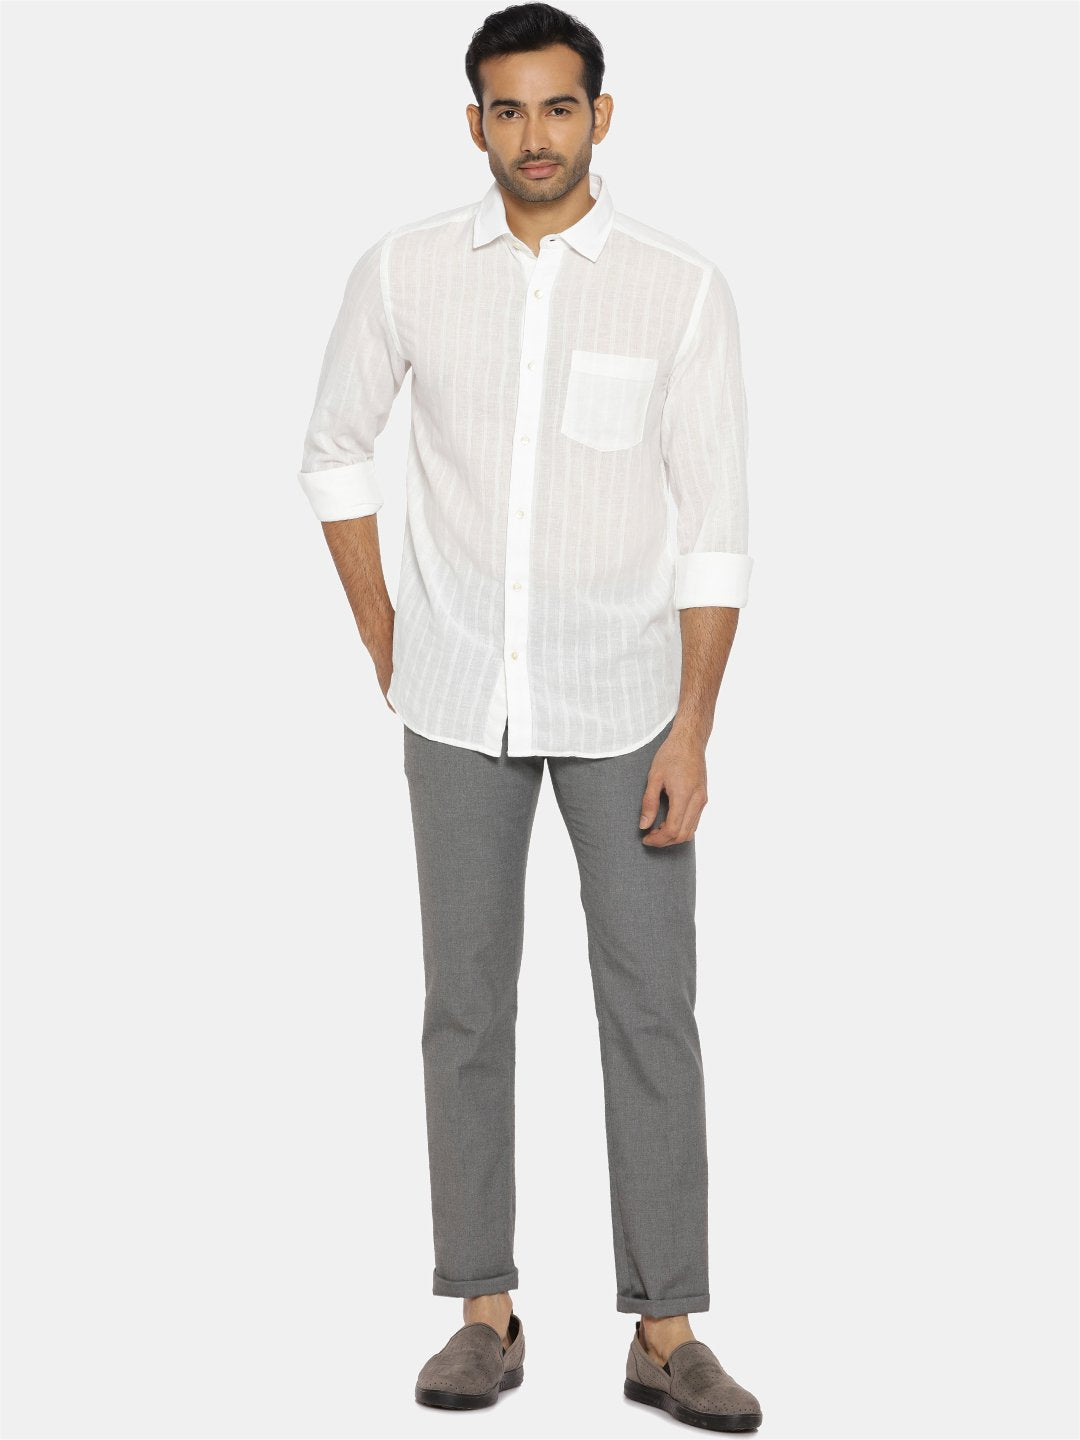 White on white striped regular collared shirt